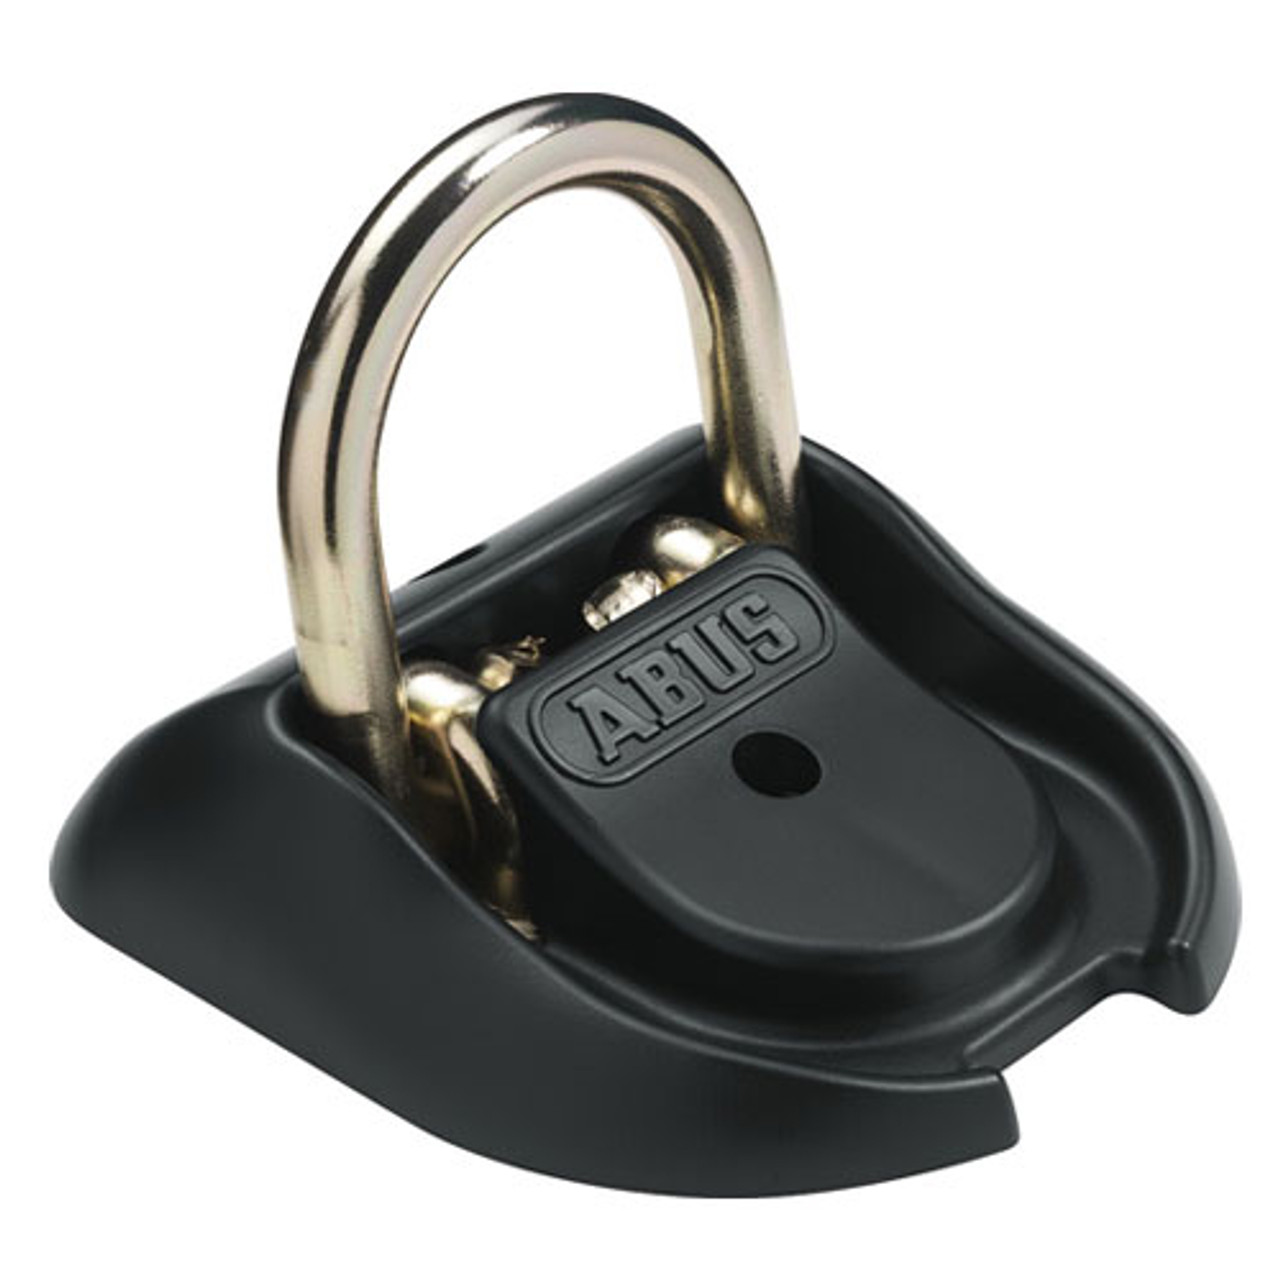 ABUS Black Granit® Ultimate Security Padlock 37RK/70 Keyed Different